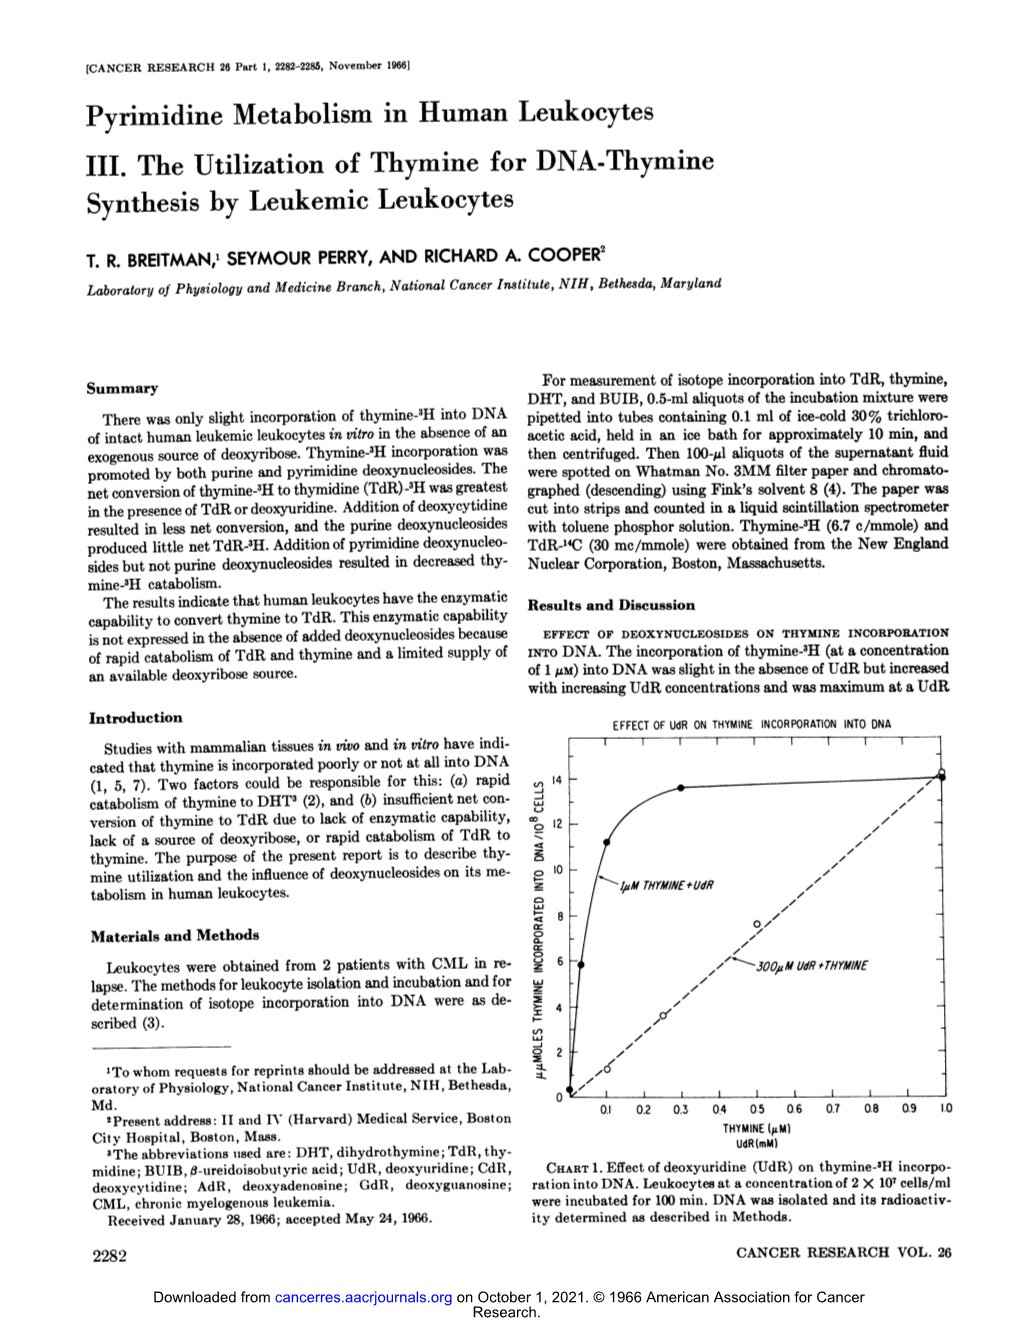 Pyrimidine Metabolism in Human Leukocytes III. the Utilization of Thymine for DNA-Thymine Synthesis by Leukemic Leukocytes